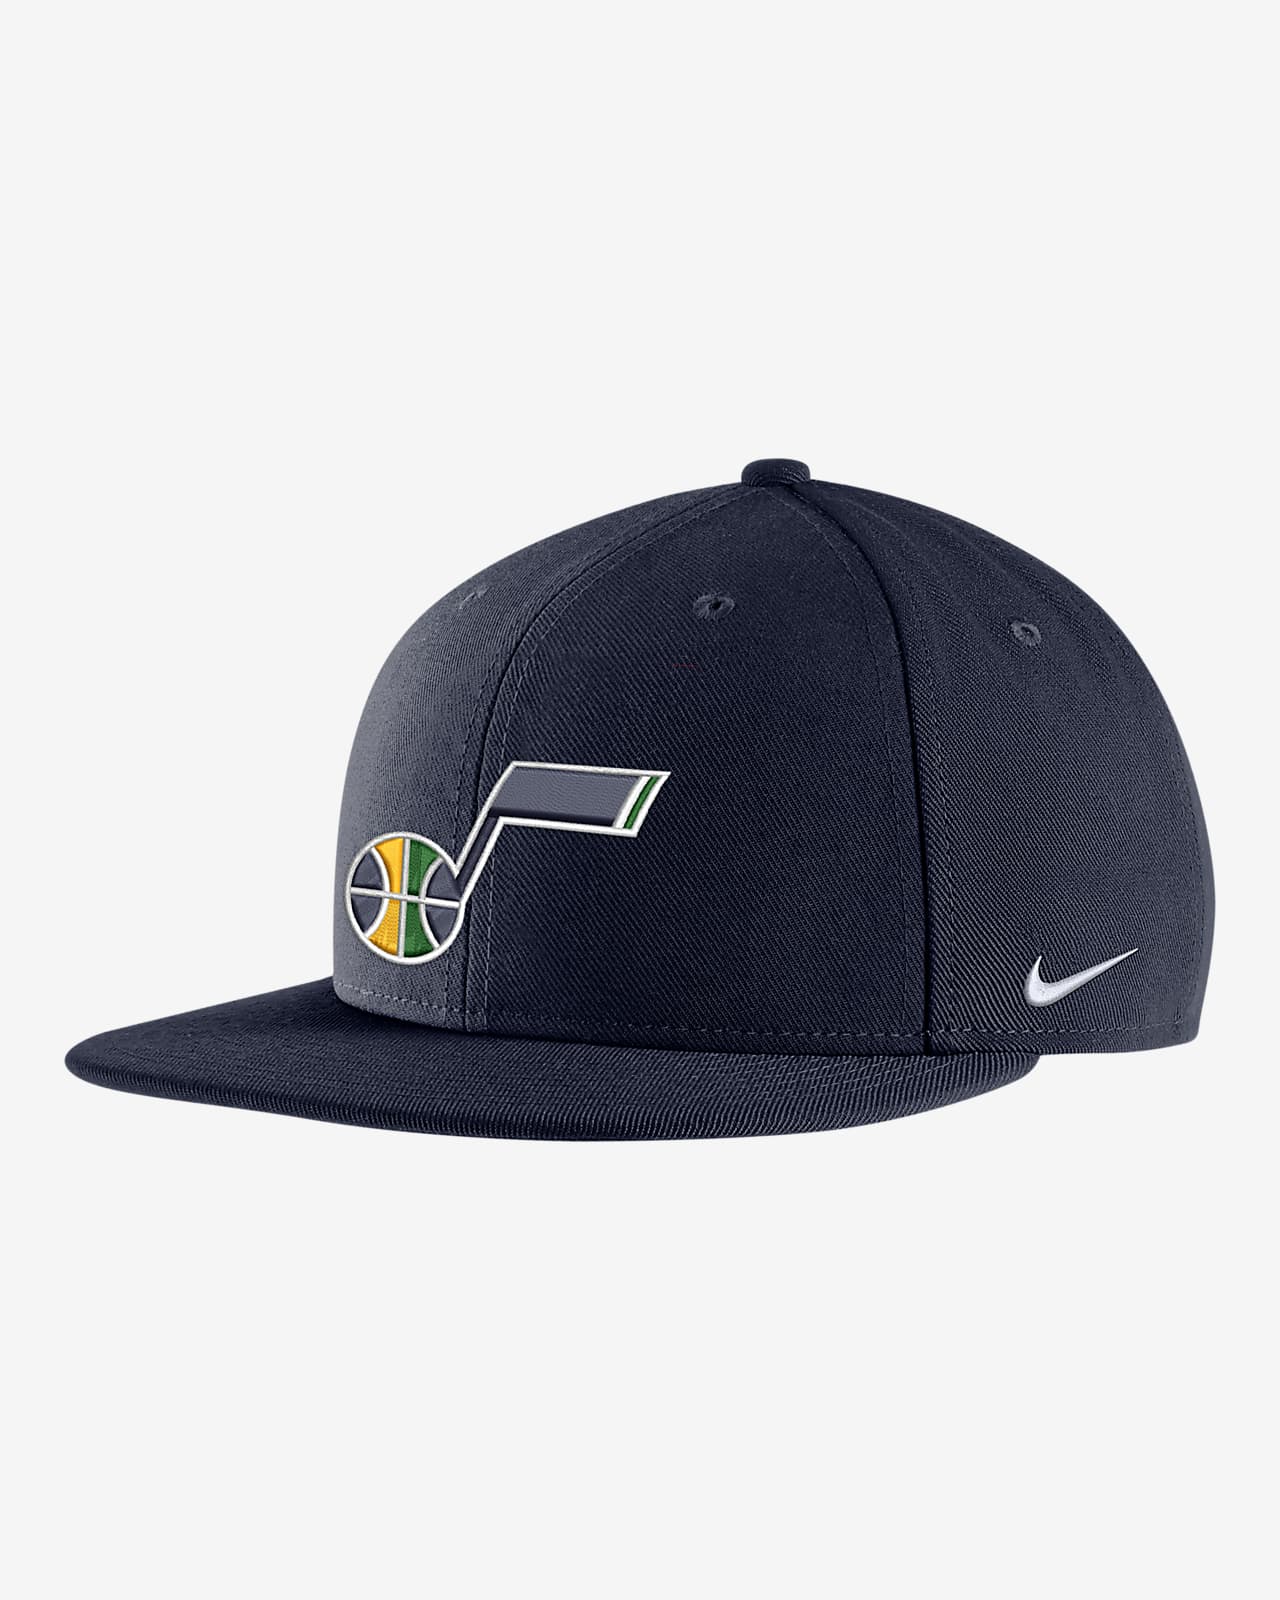 Utah Jazz Nike NBA Snapback Hat.